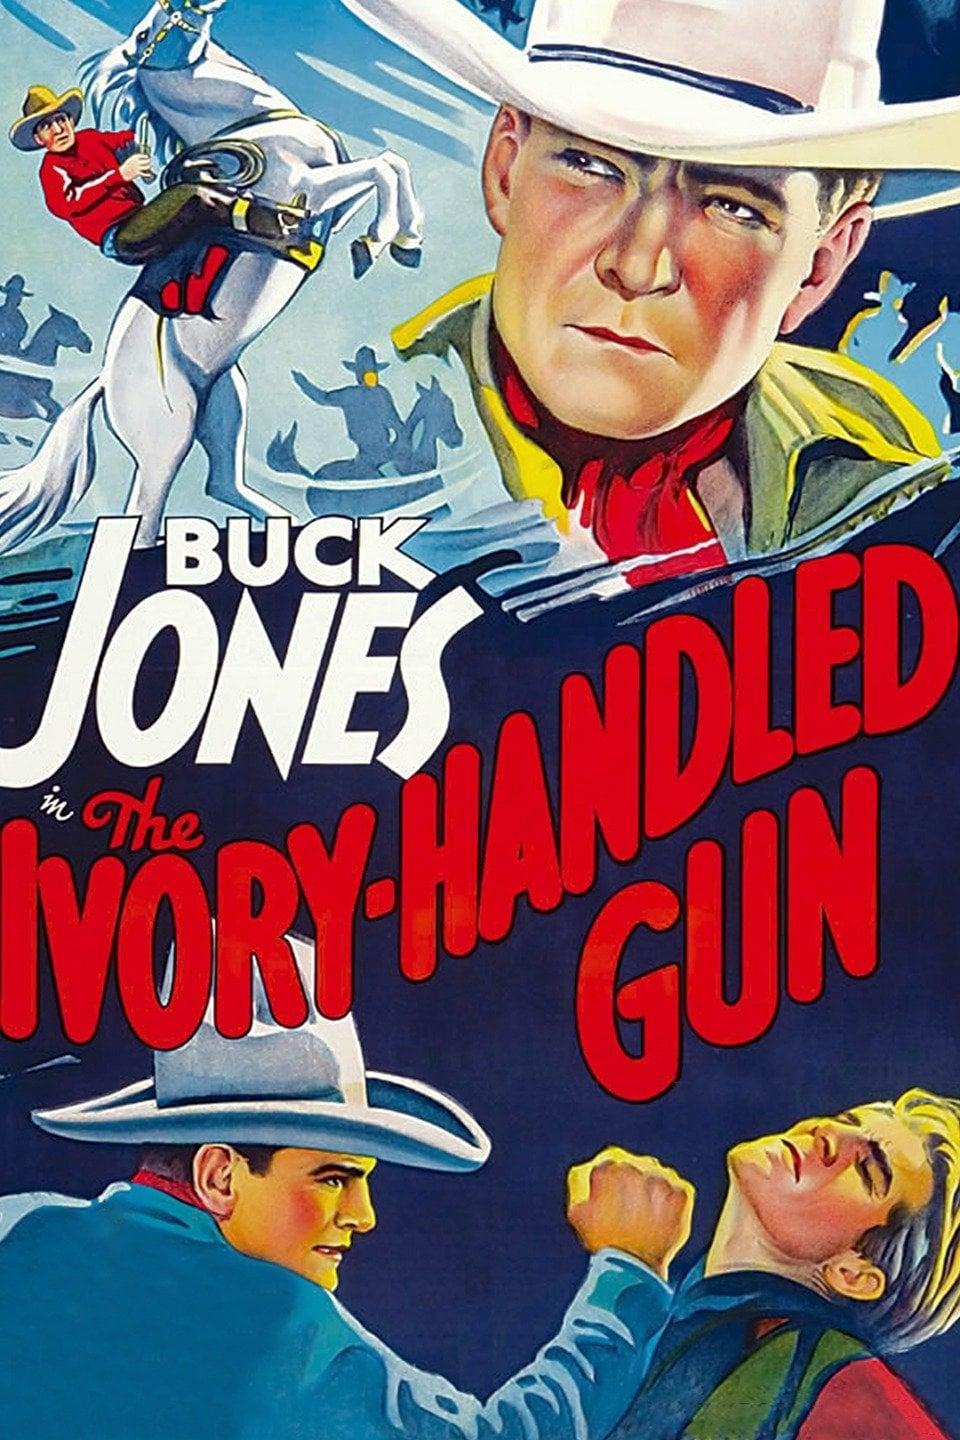 The Ivory-Handled Gun poster